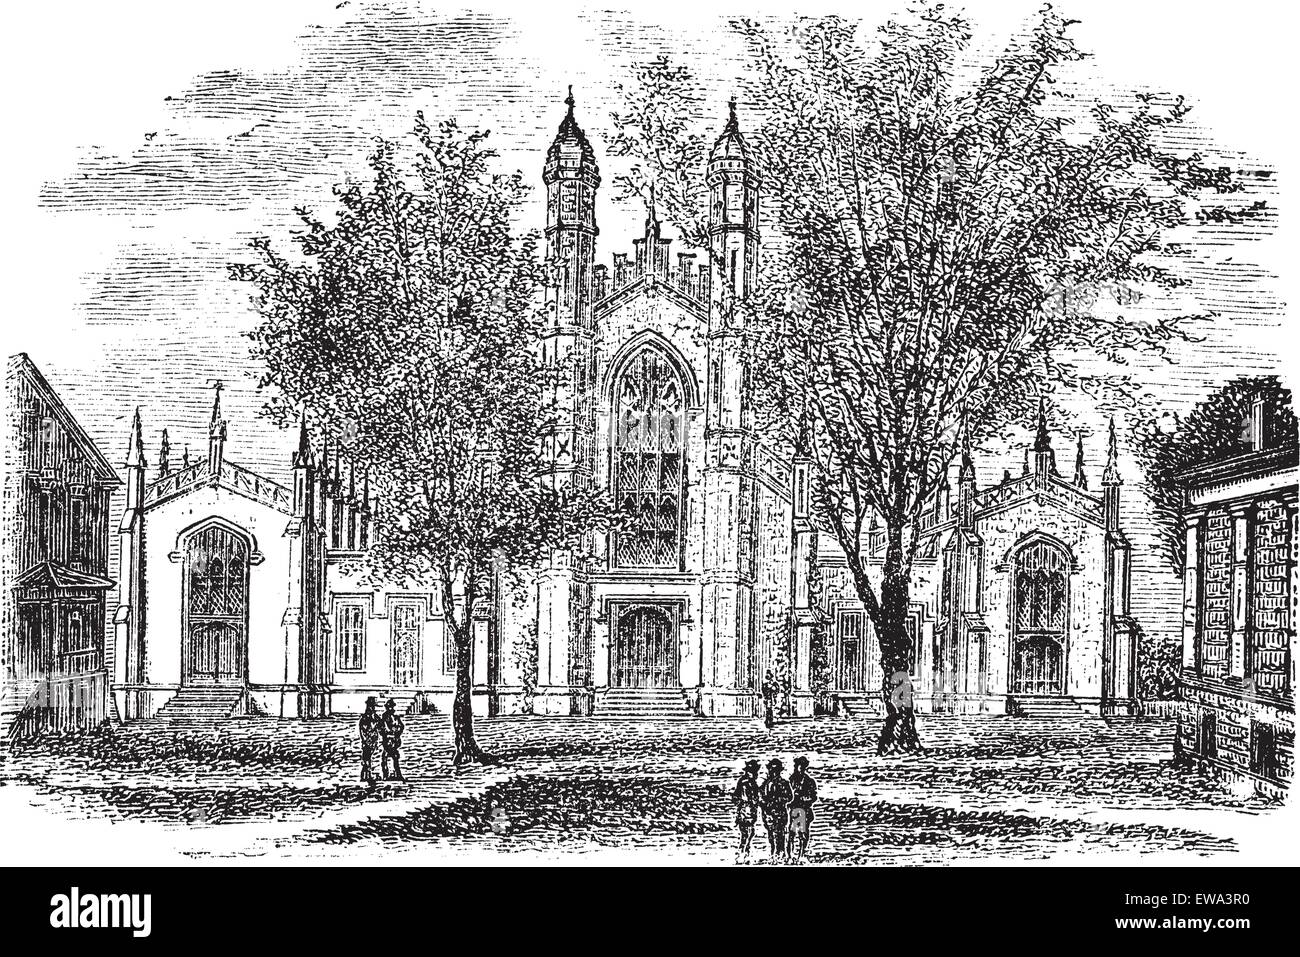 Yale University Library, eingraviert in New Haven, Connecticut, USA, Vintage Illustration. Trousset Enzyklopädie (1886-1891). Stock Vektor